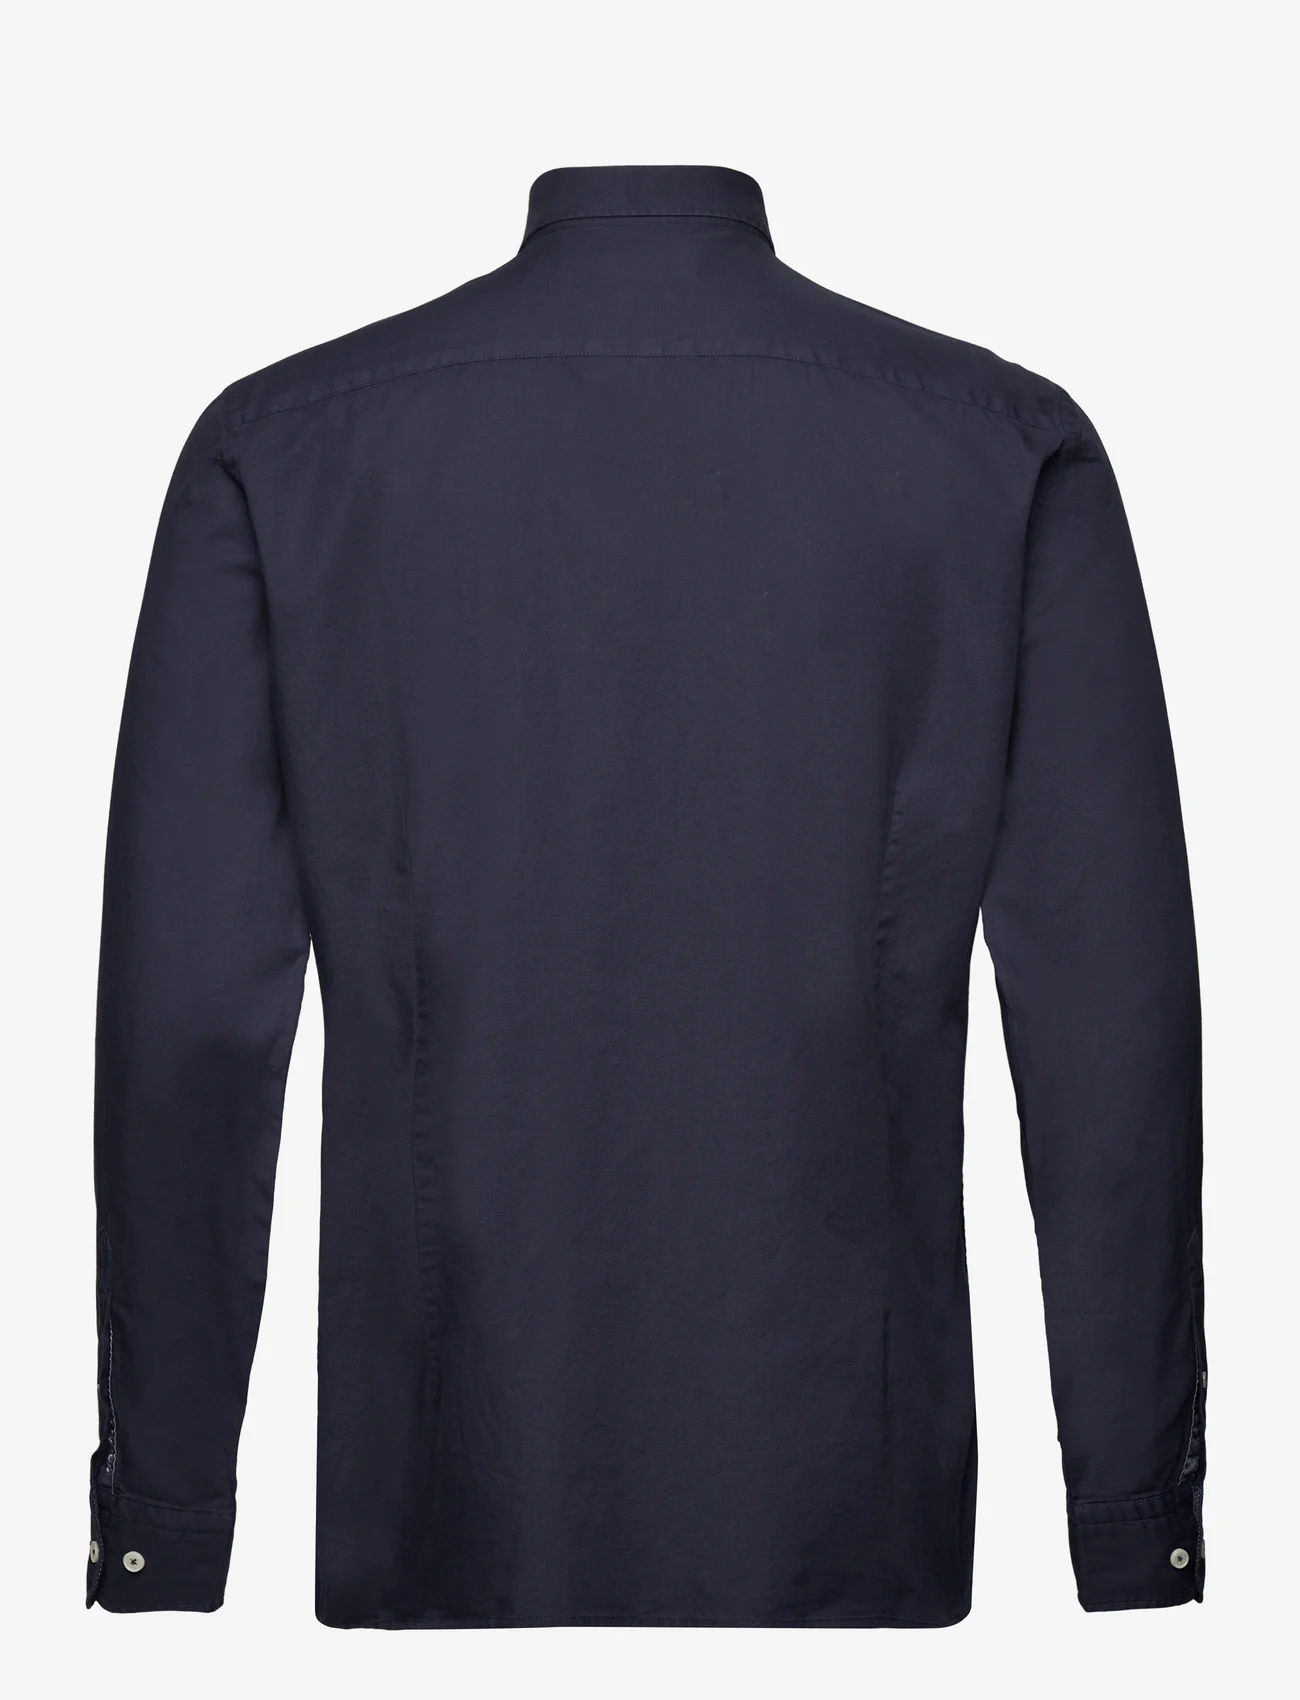 Hackett London - GARMENT DYED OXFORD - oxford shirts - navy blue - 1